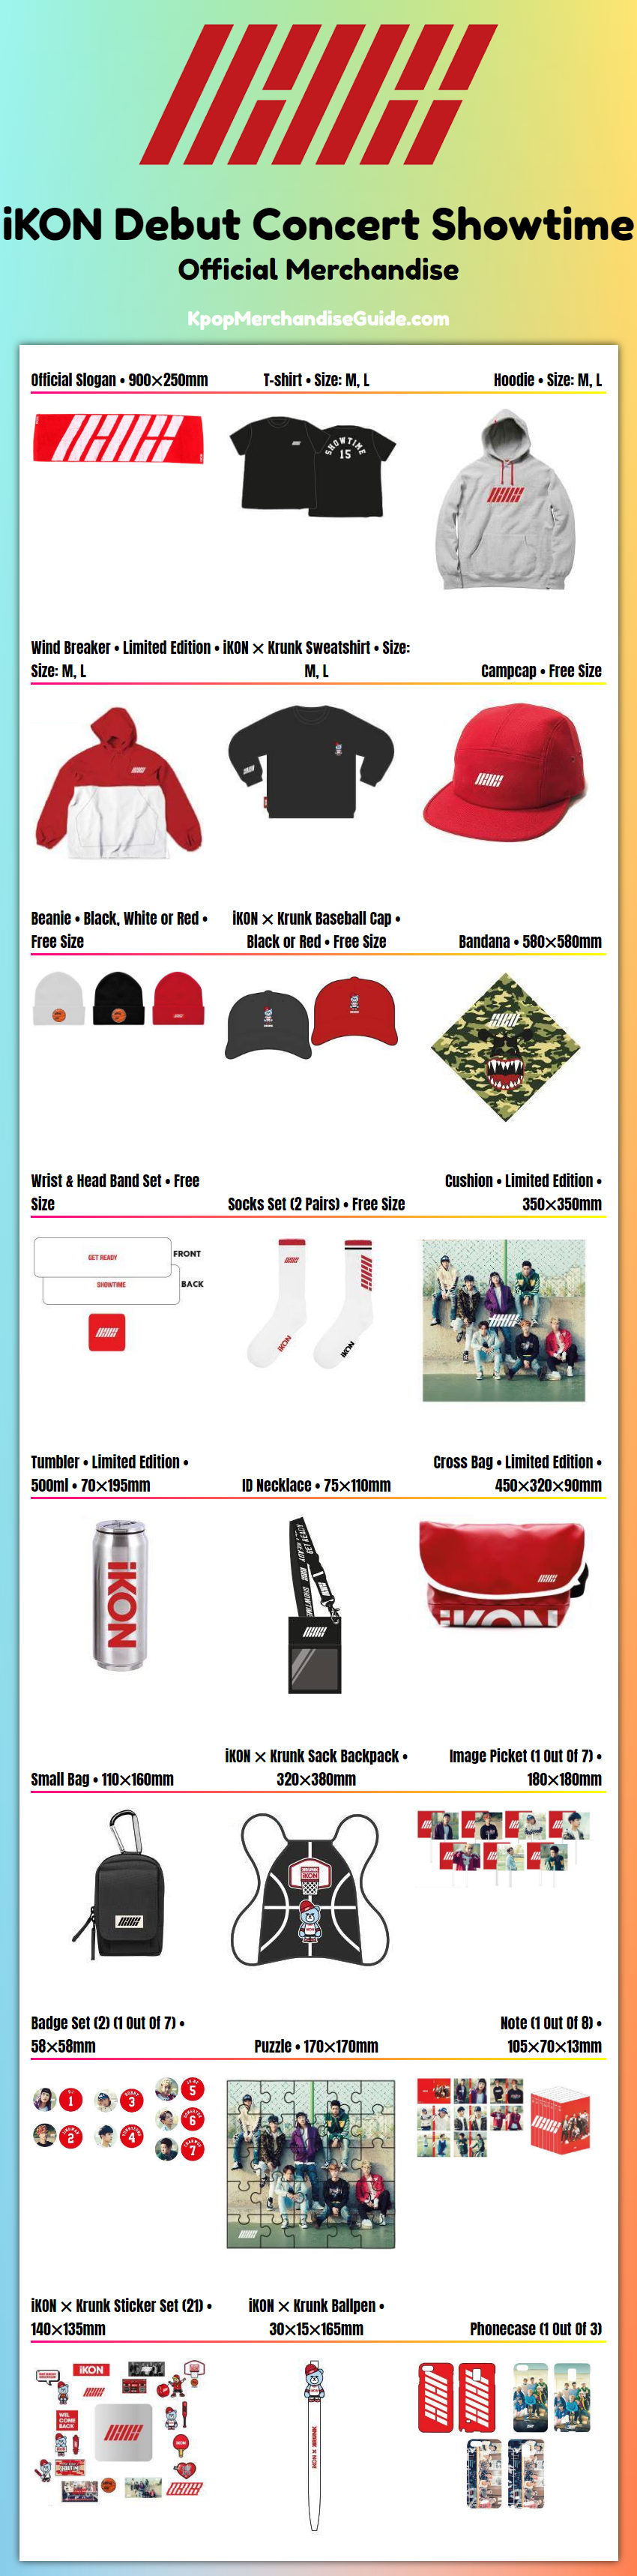 iKON Debut Concert Showtime Merchandise